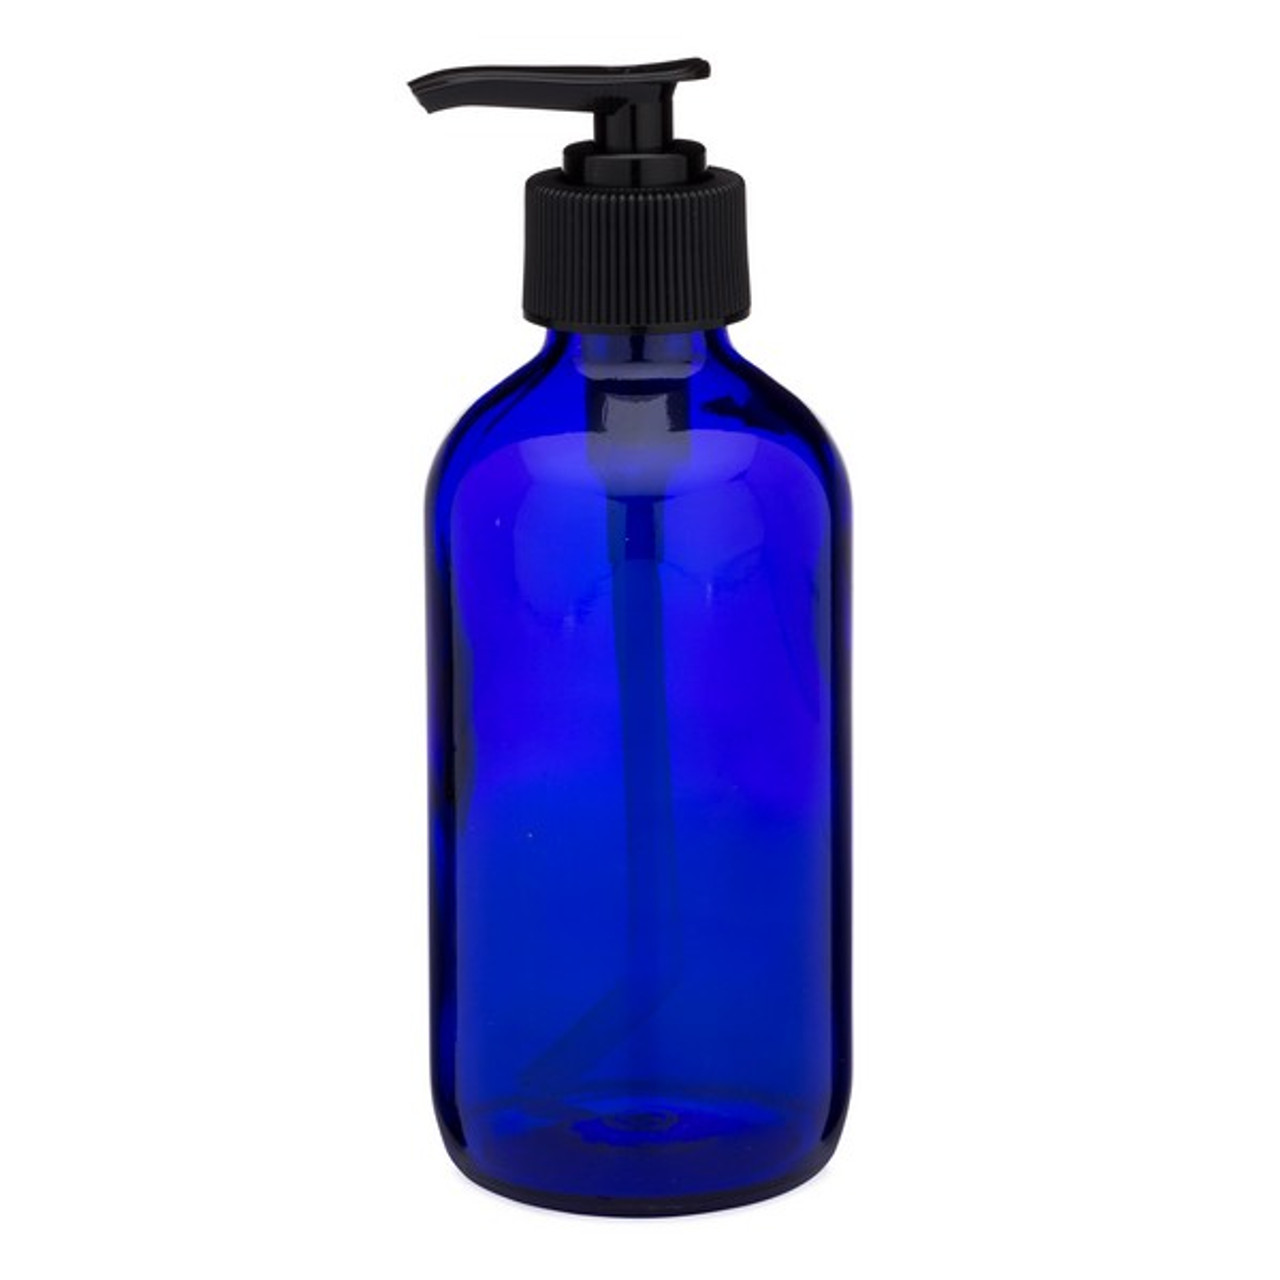 8oz Cobalt Blue Glass Boston Round Bottles (Black PP Lotion Pump) - Wholesale, 24/Case, Cobalt Blue Type III UV Resistant 28-400